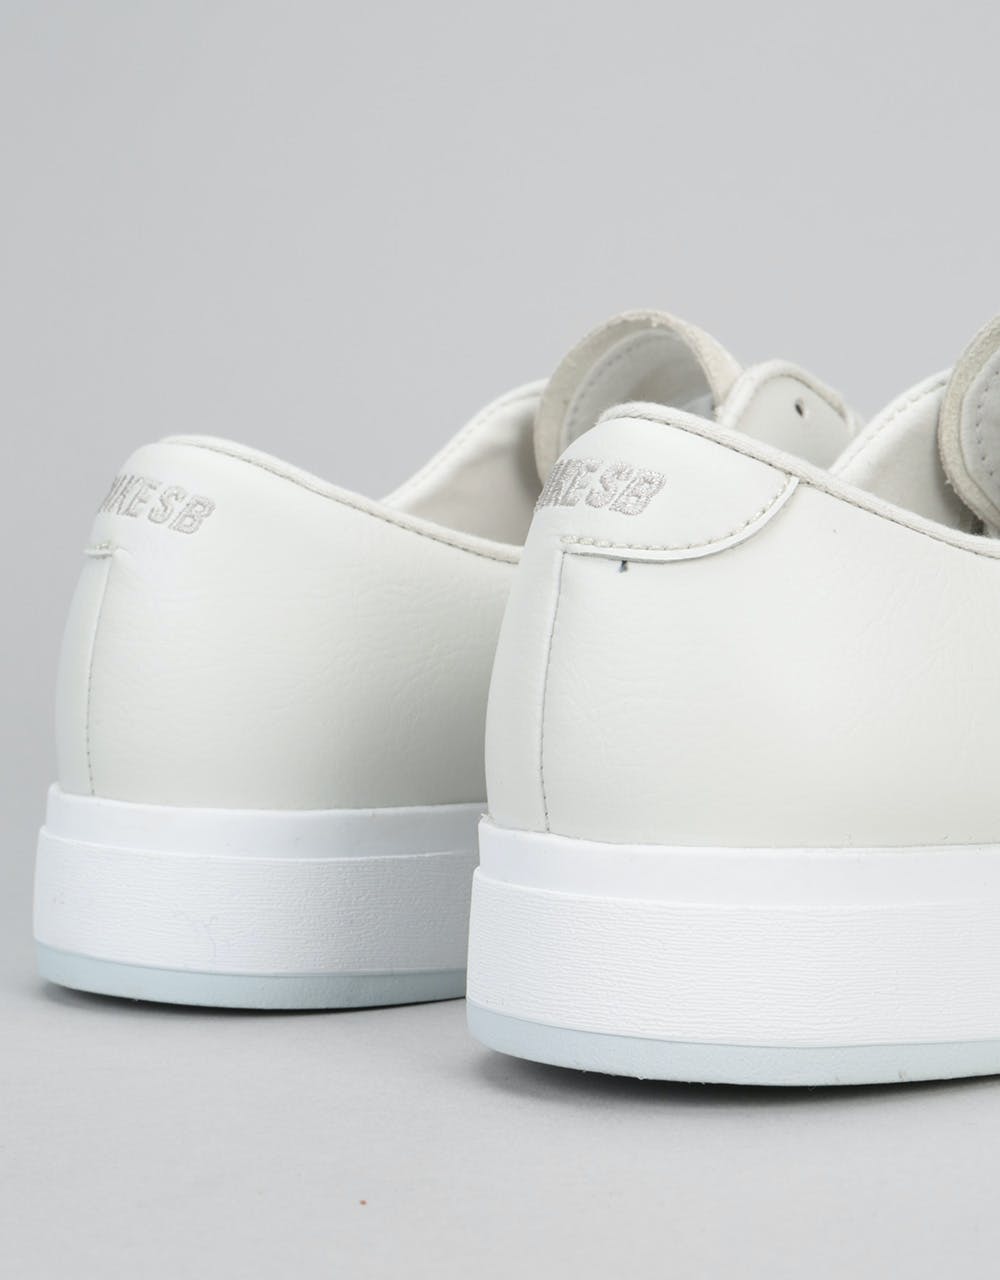 Nike SB Paul Rodriguez X Skate Shoe - White/Pure Platinum-Black